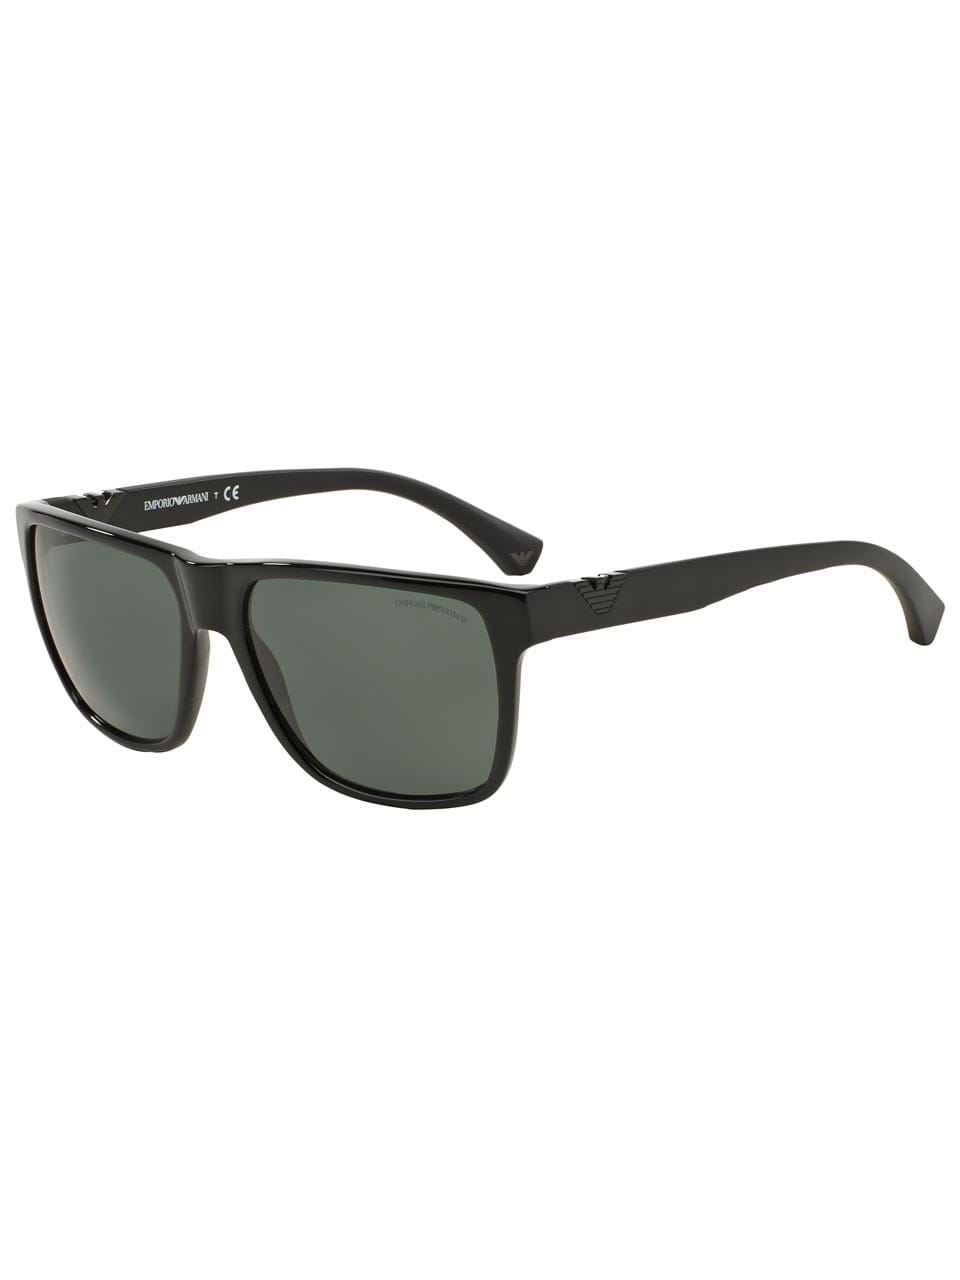 armani men's sunglasses black